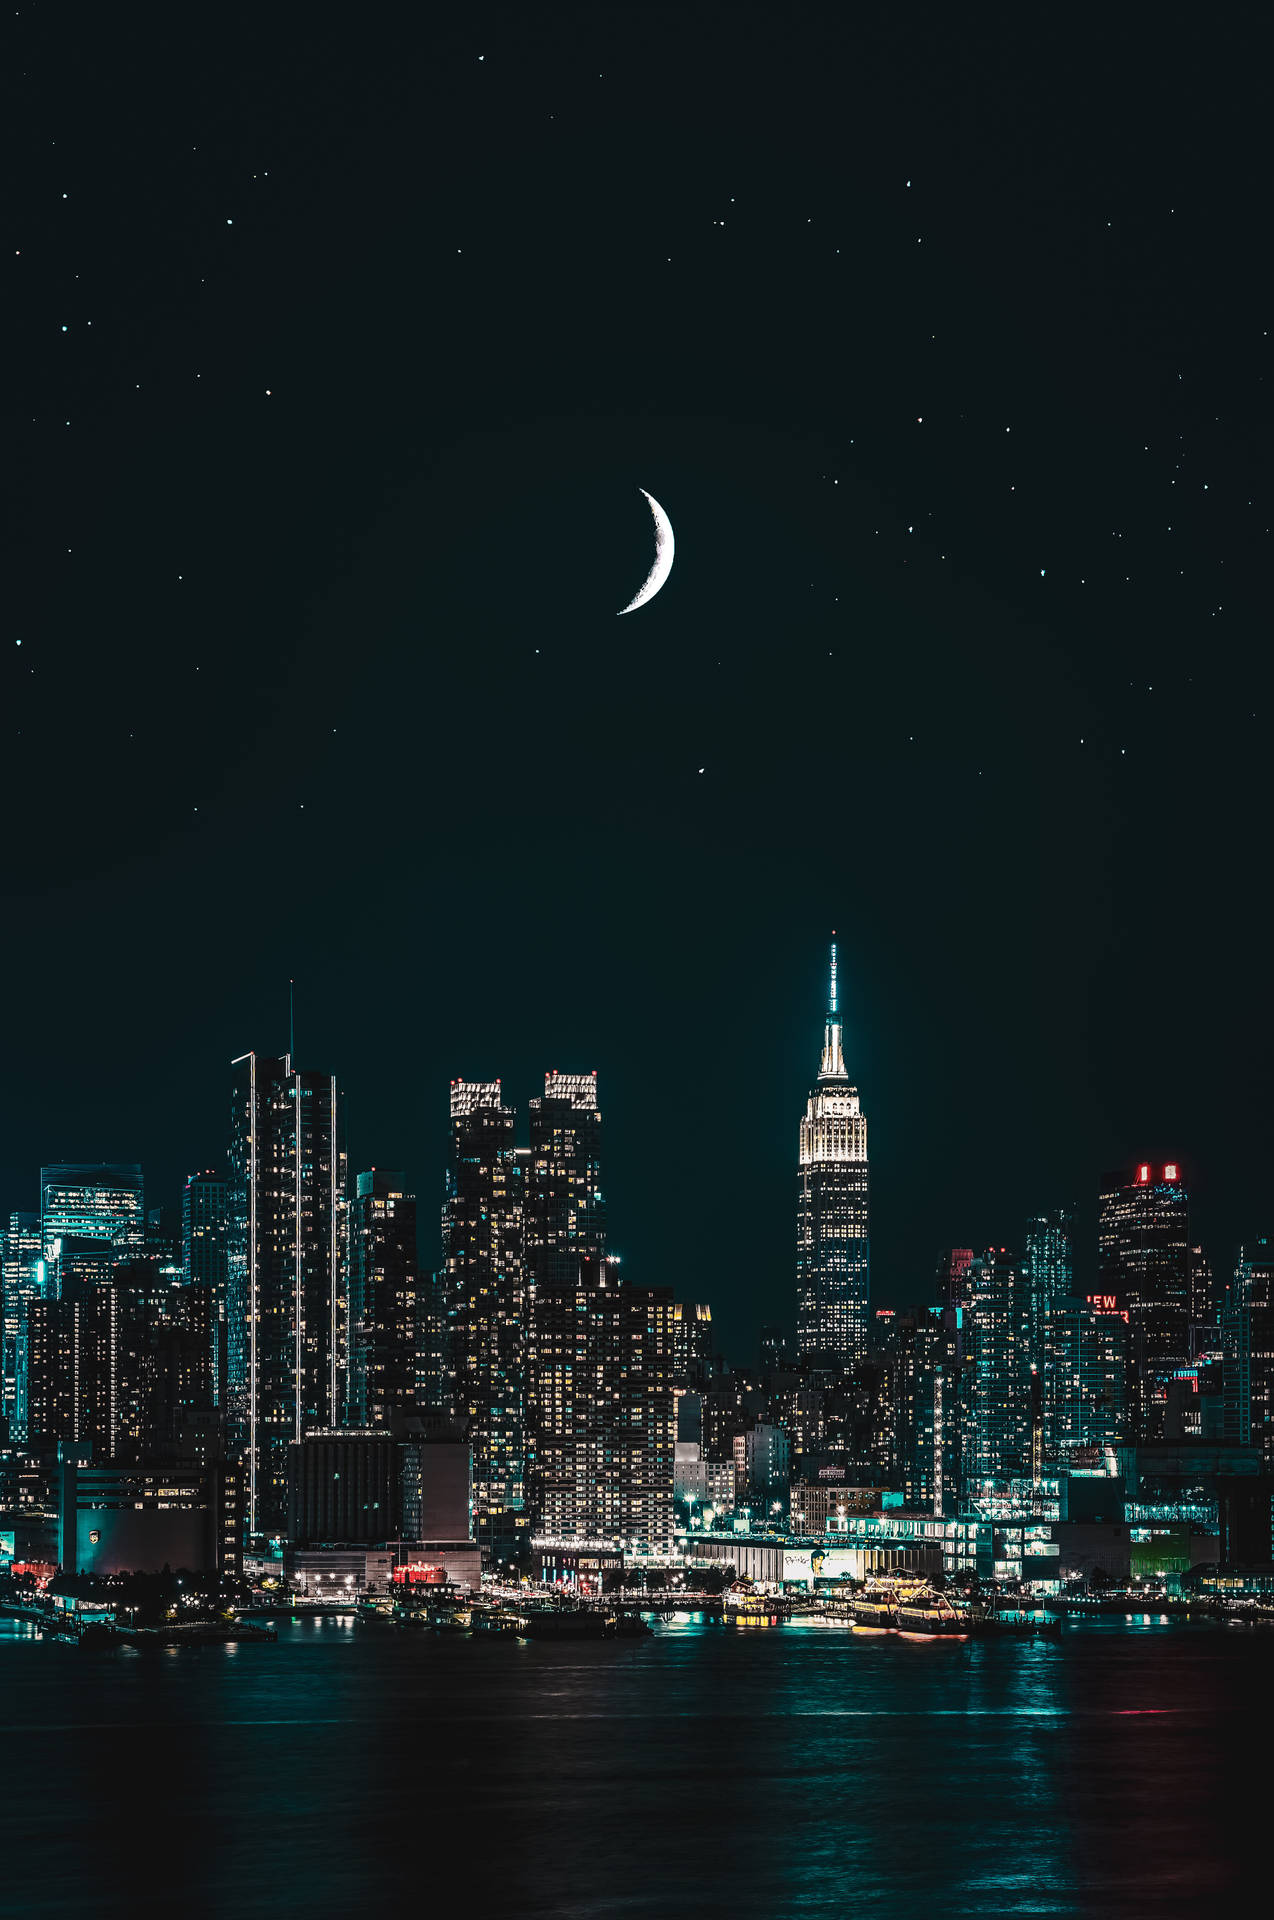 Iphone 11 Pro Max 4k City Night Background